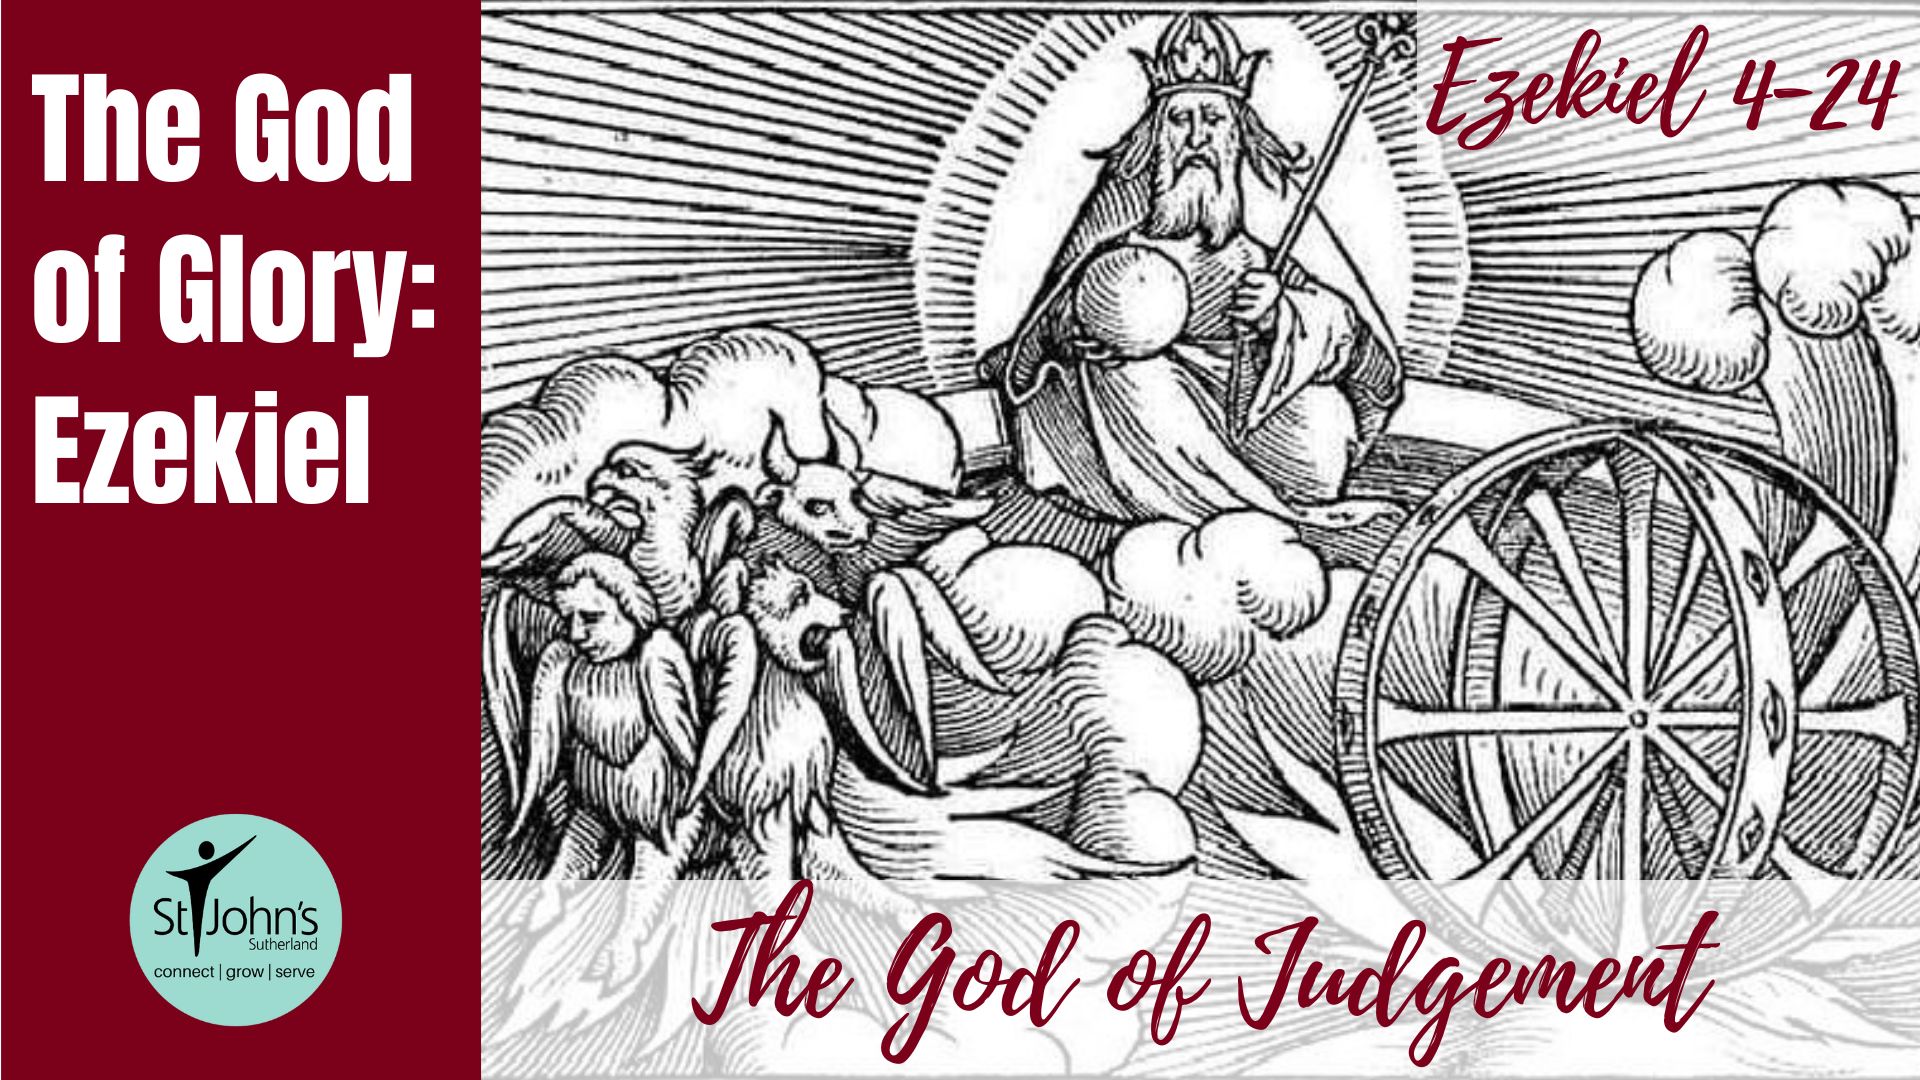 The God of Judgement: Ezekiel 4-24